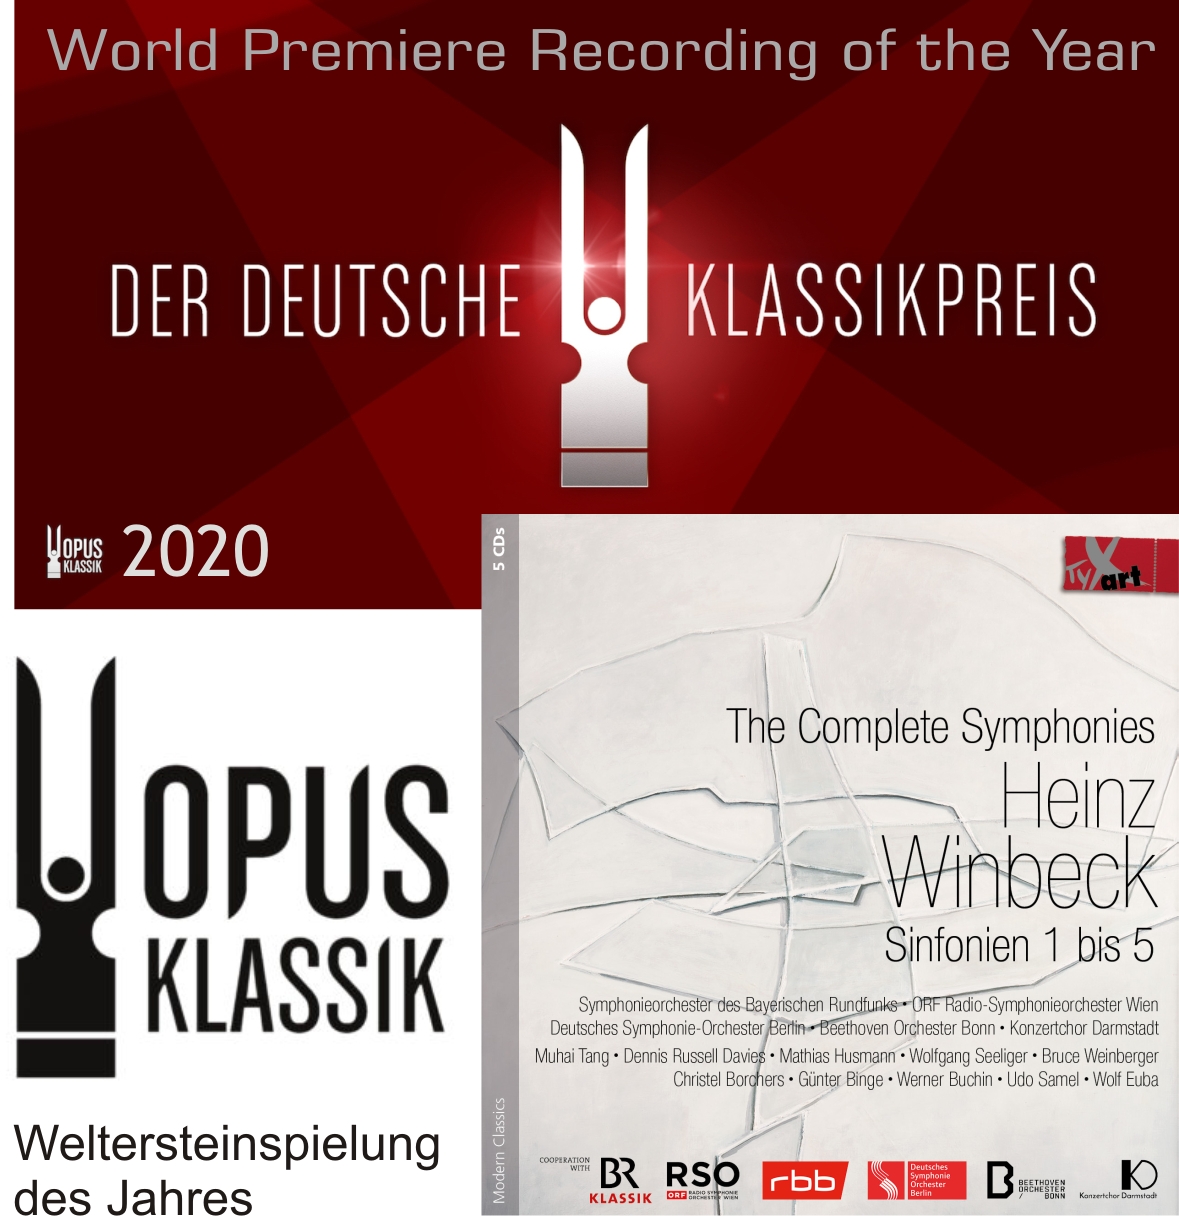 OPUS KLASSIK 2020 Award